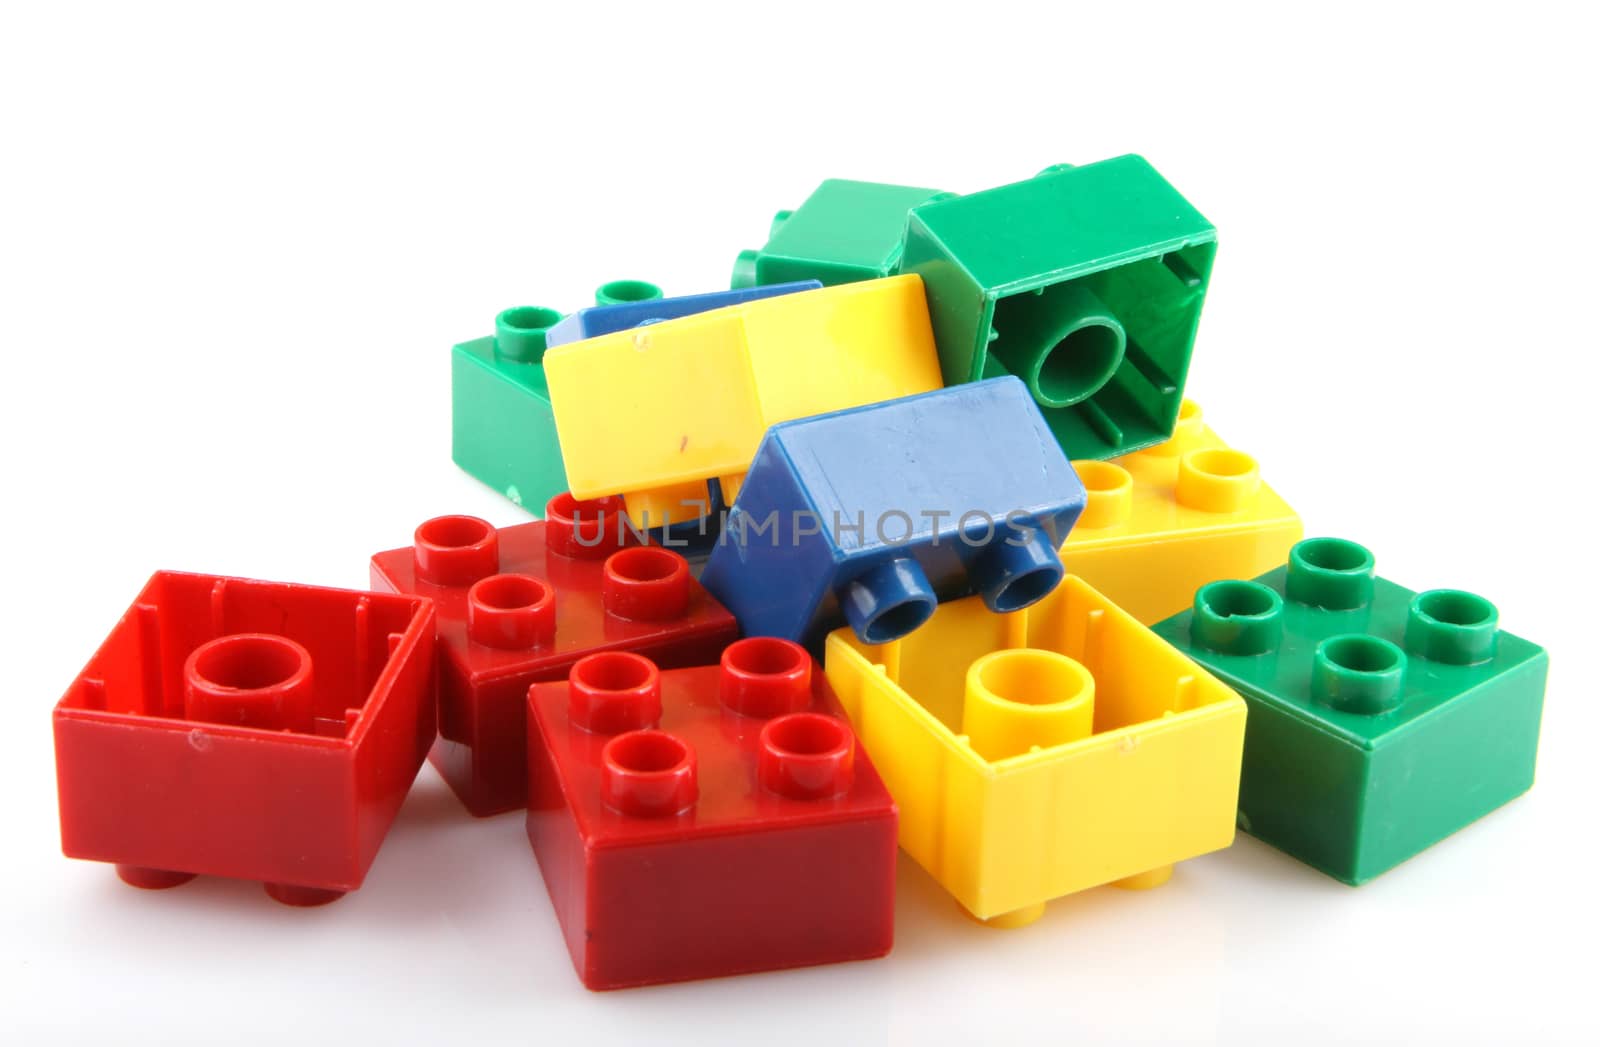 Building Blocks by nenov